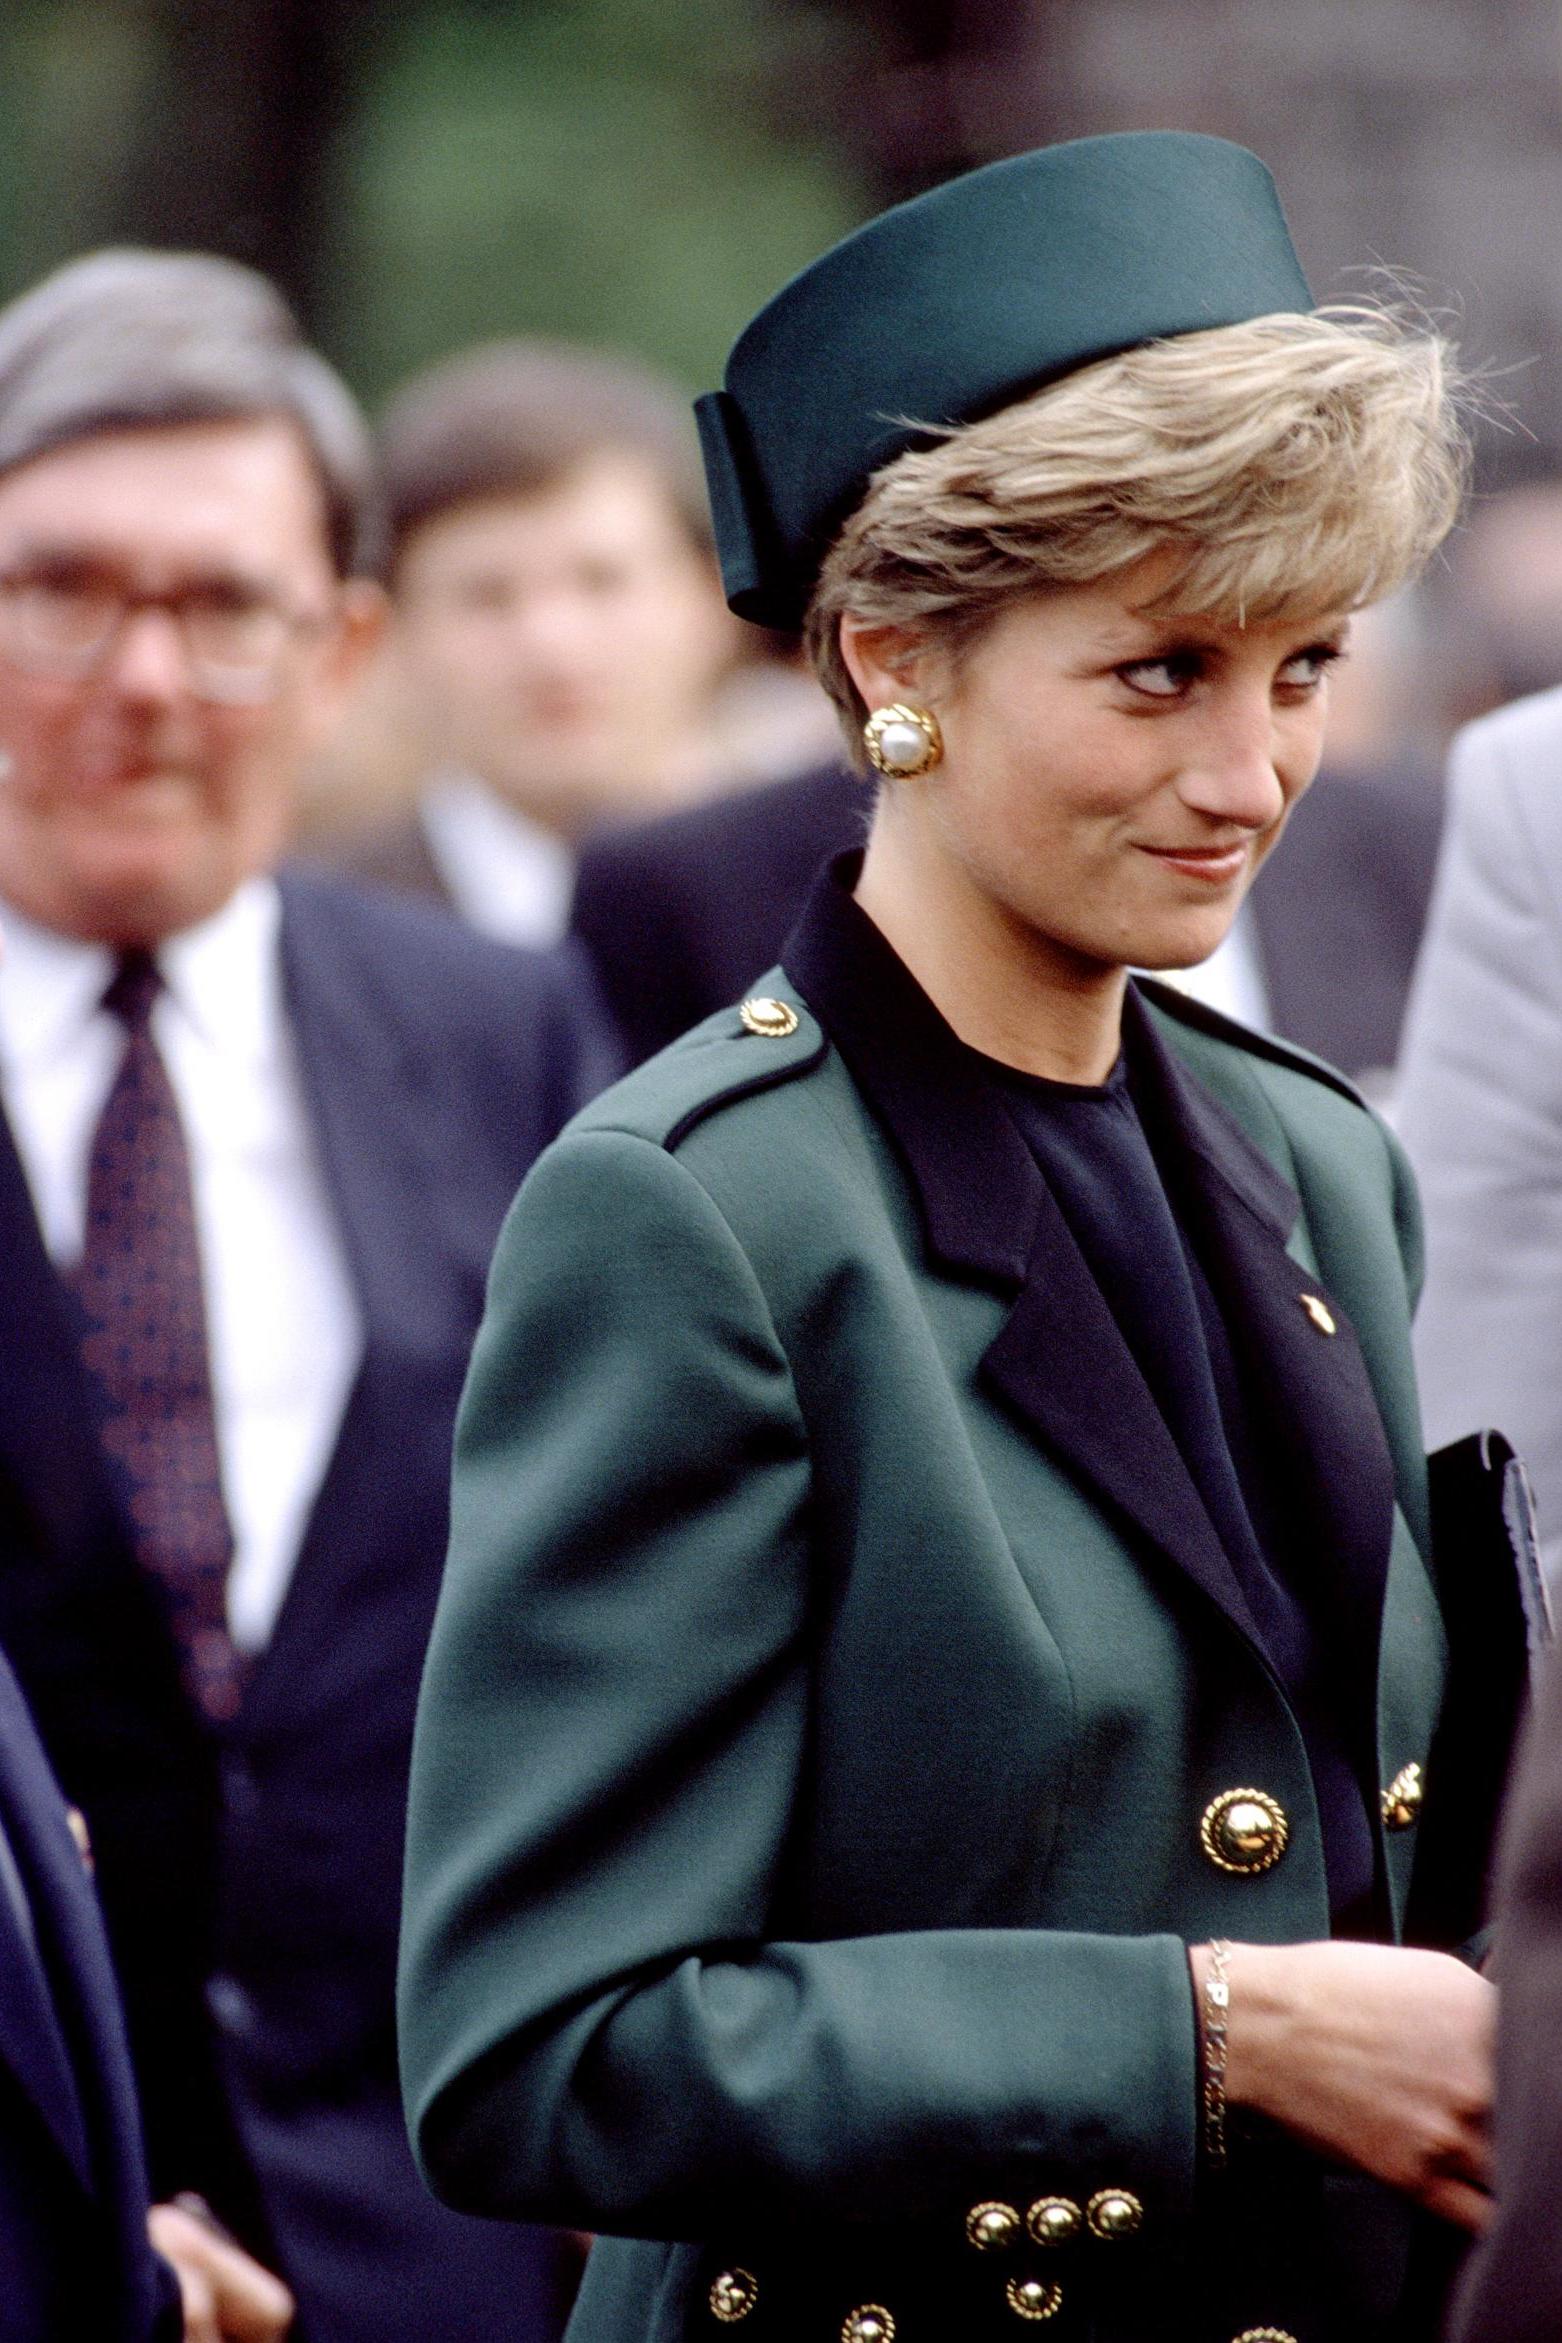 The Duchess of Sussex wore khaki green dress to Prince Louis' christening –  Meghan Markle in green Ralph Lauren dress